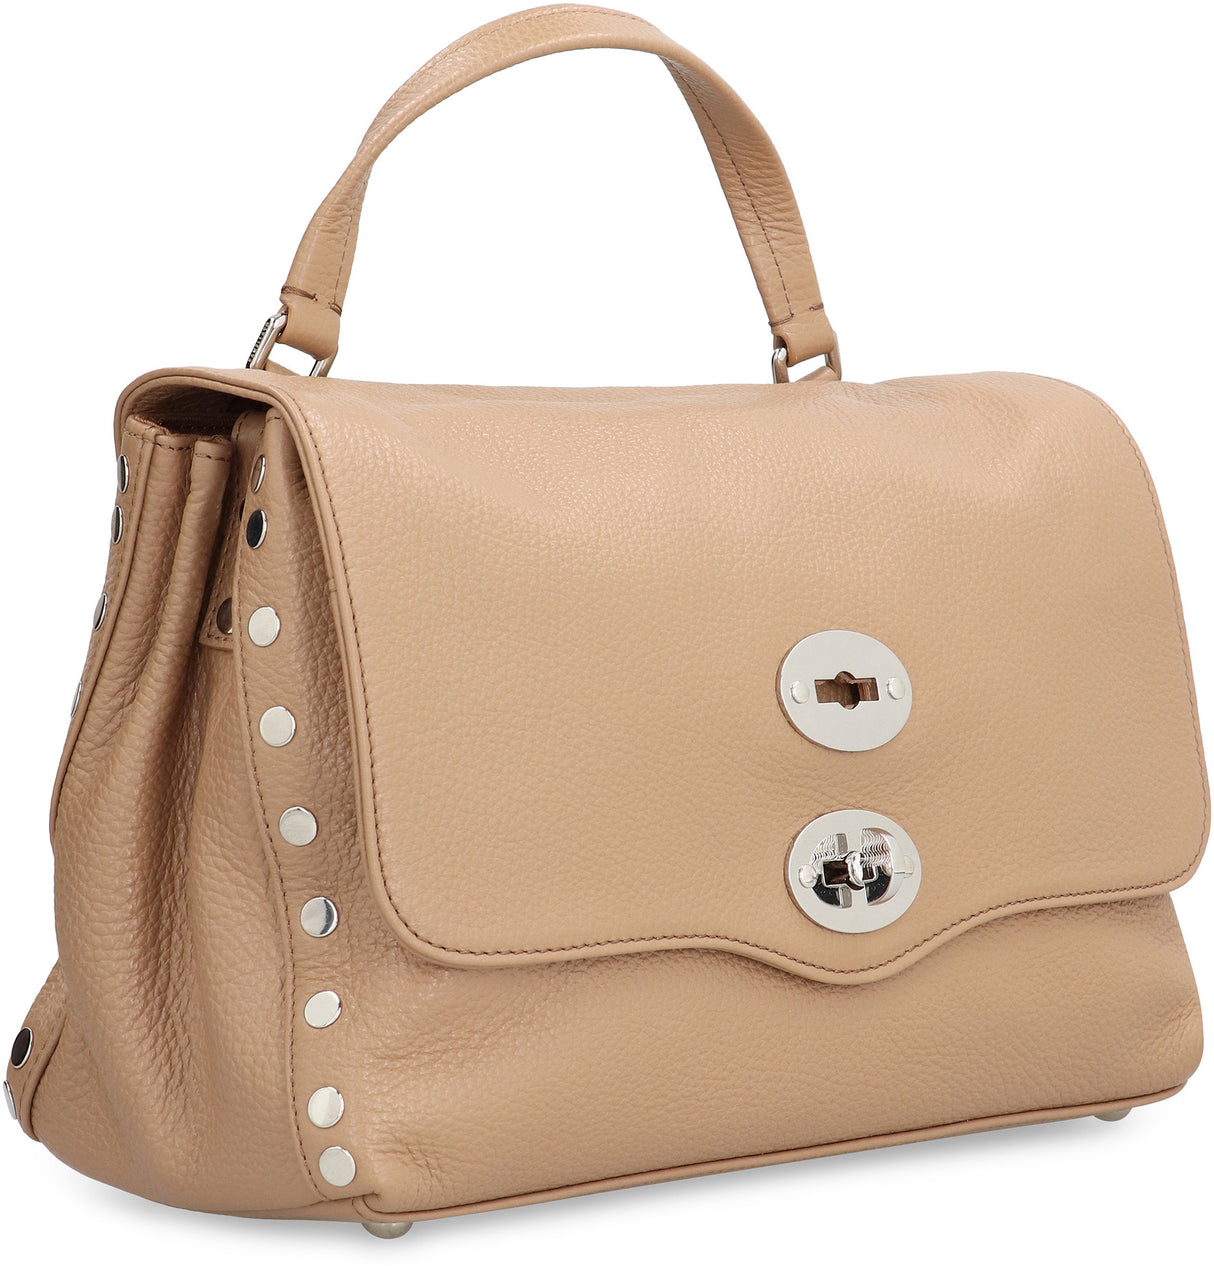 ZANELLATO Grainy Leather Handbag with Decorative Studs and Removable Strap